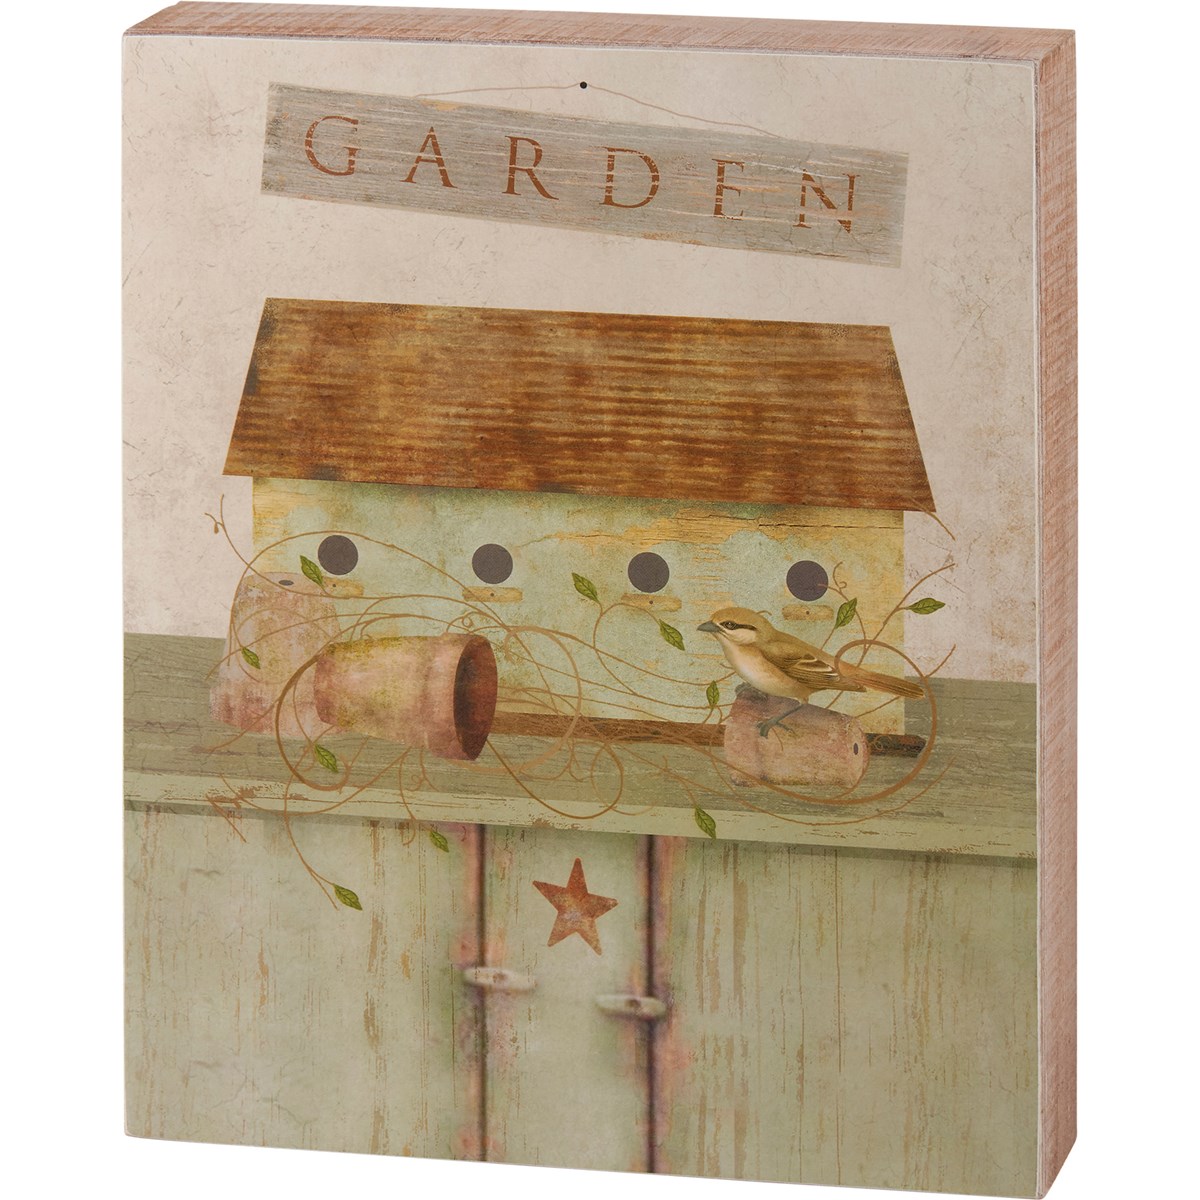 Birdhouse Box Sign - Wood, Paper